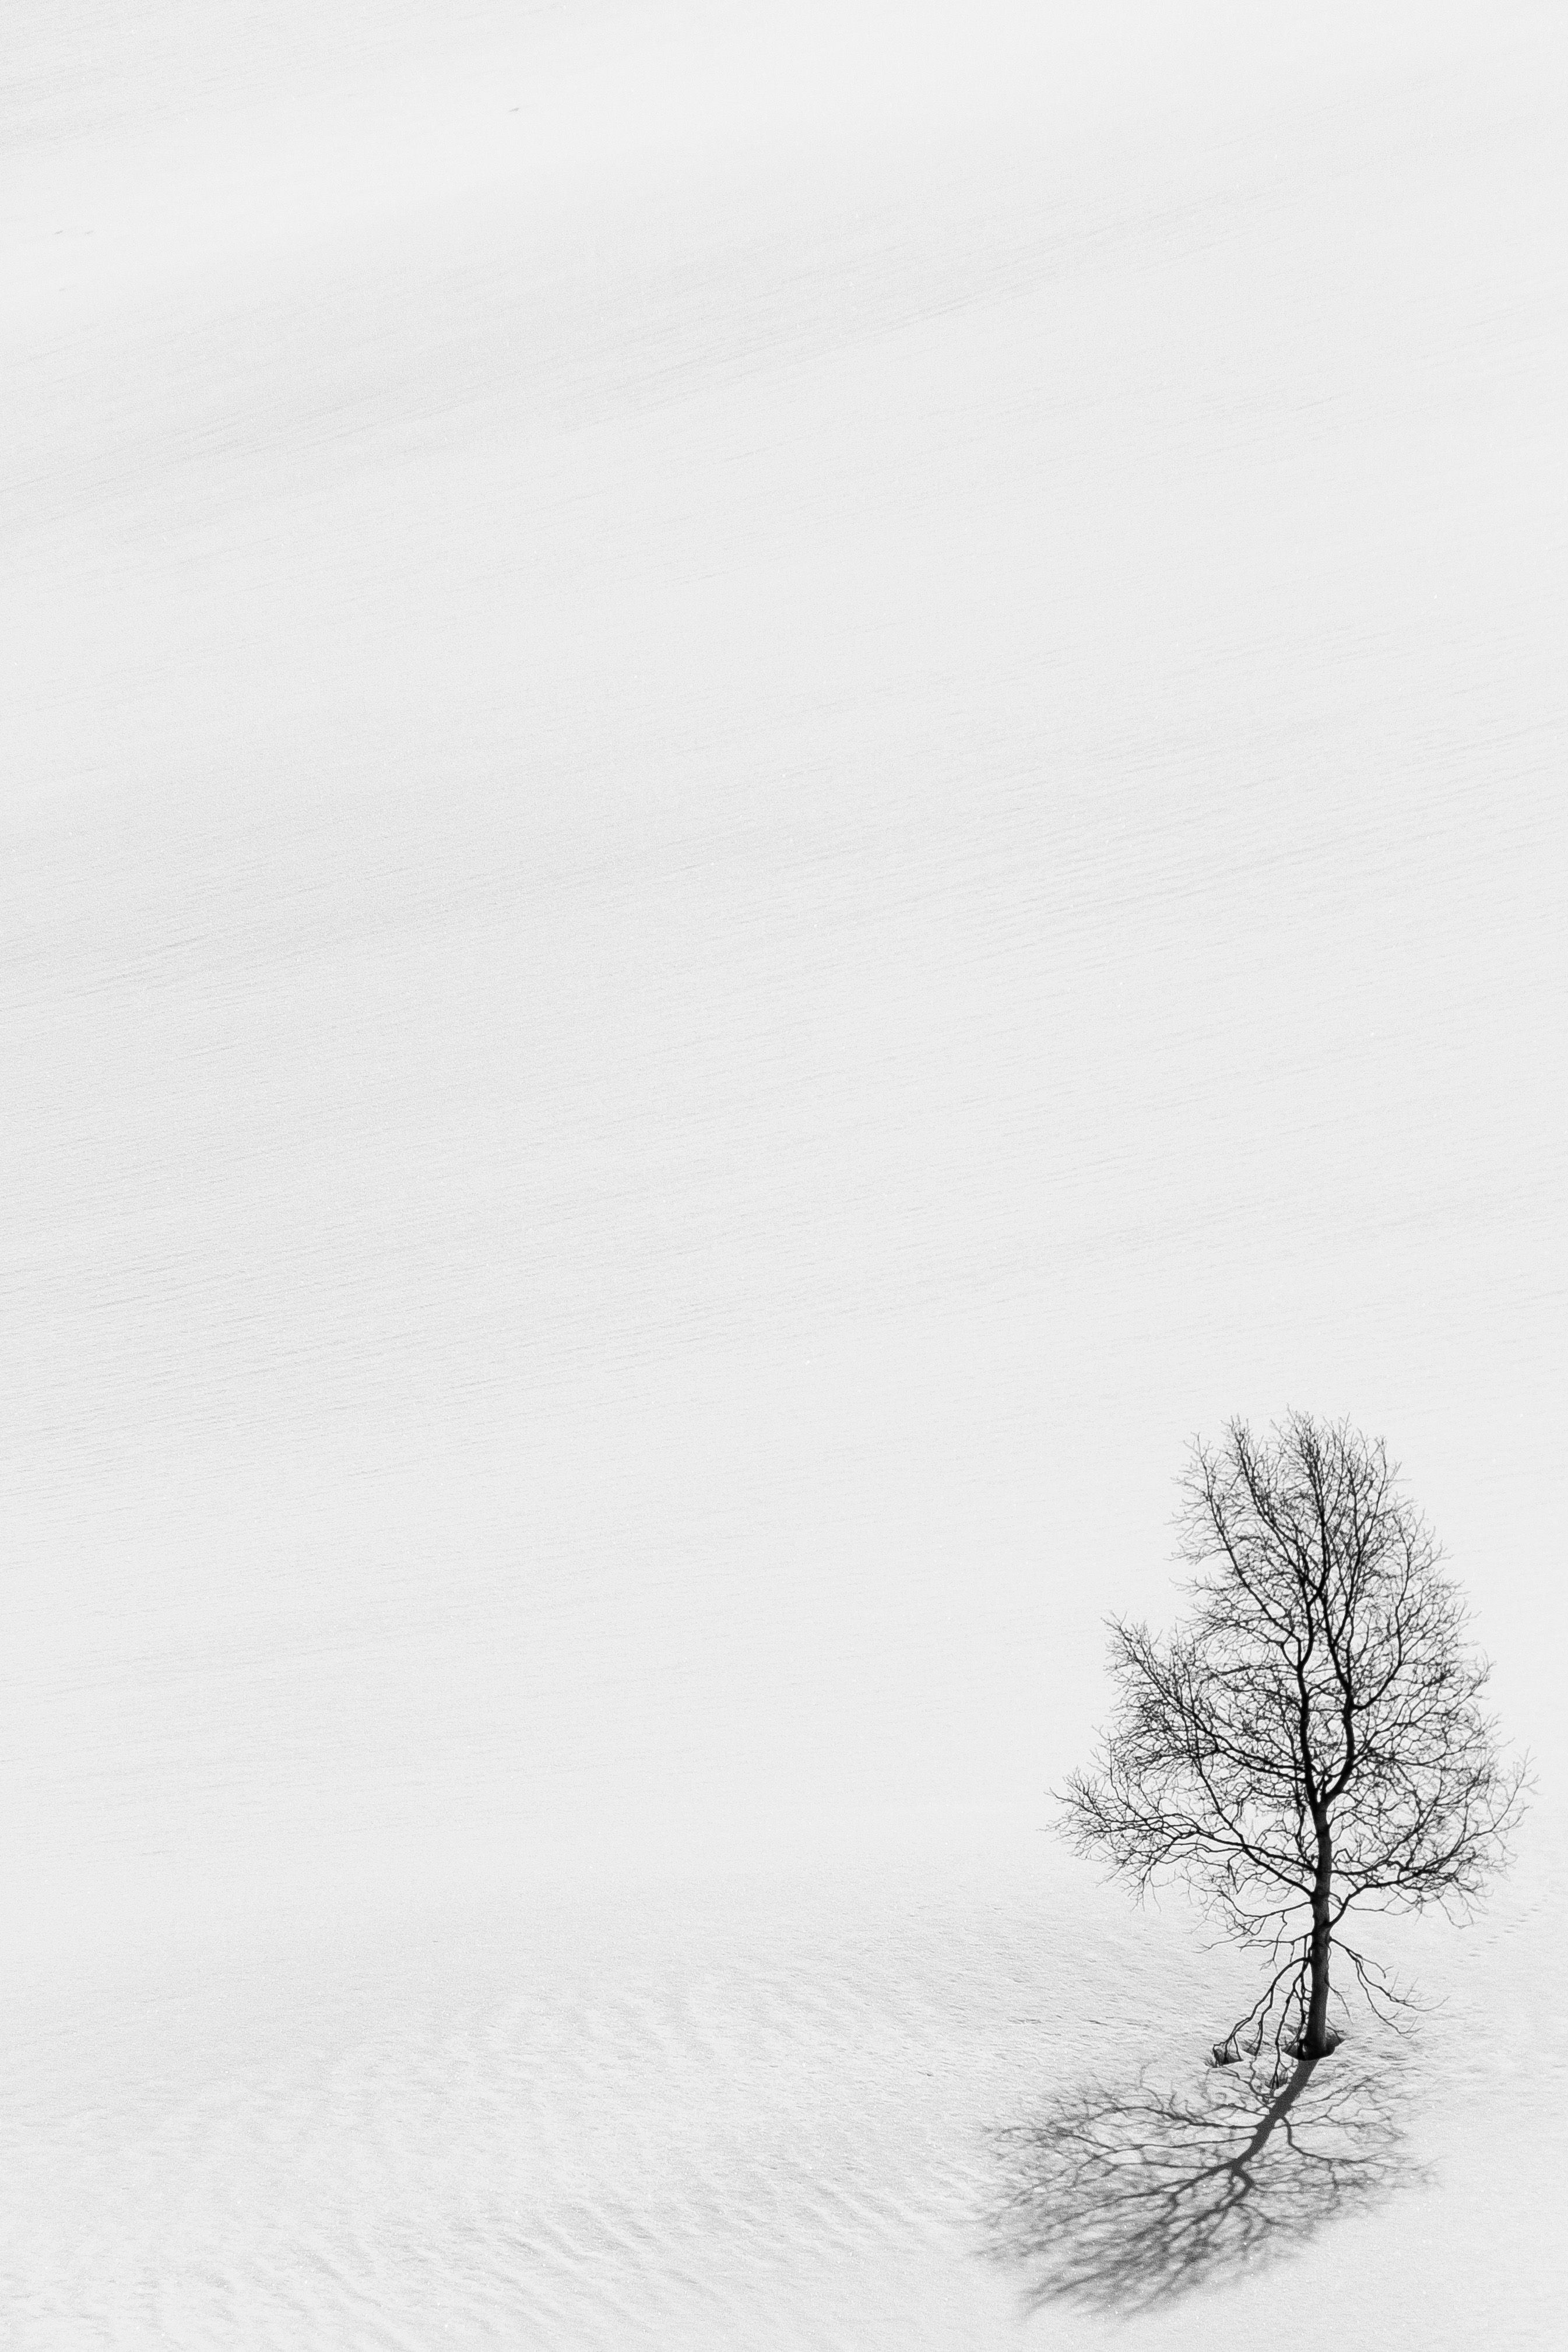 chb, winter, nature, snow, wood, tree, minimalism, bw